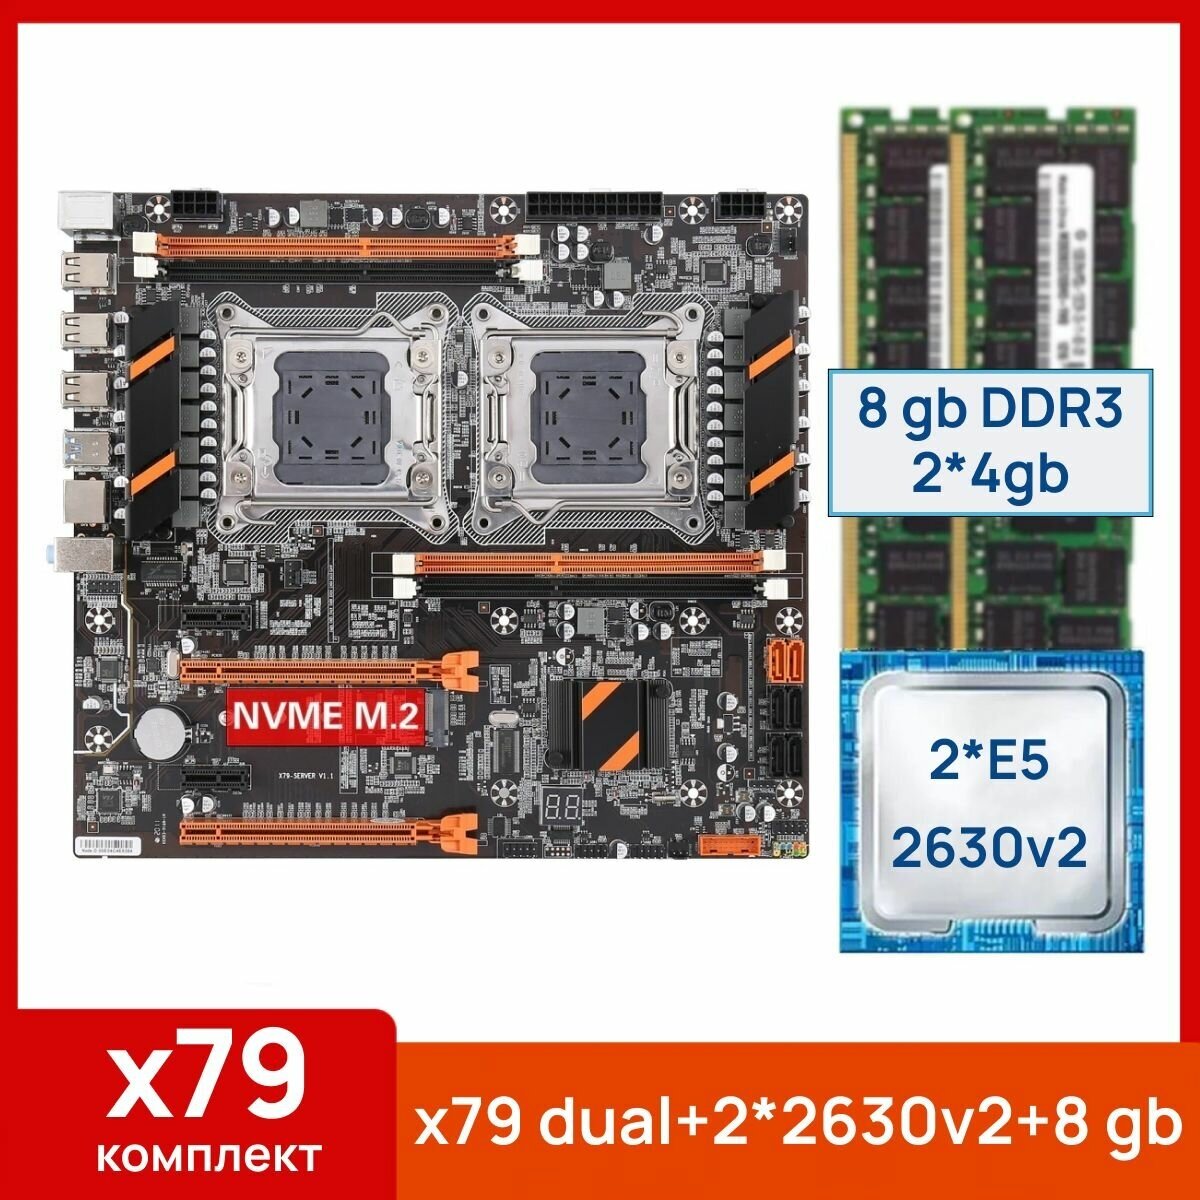 Комплект: Atermiter x79 dual + Xeon E5 2630v2*2 + 8 gb(2x4gb) DDR3 ecc reg